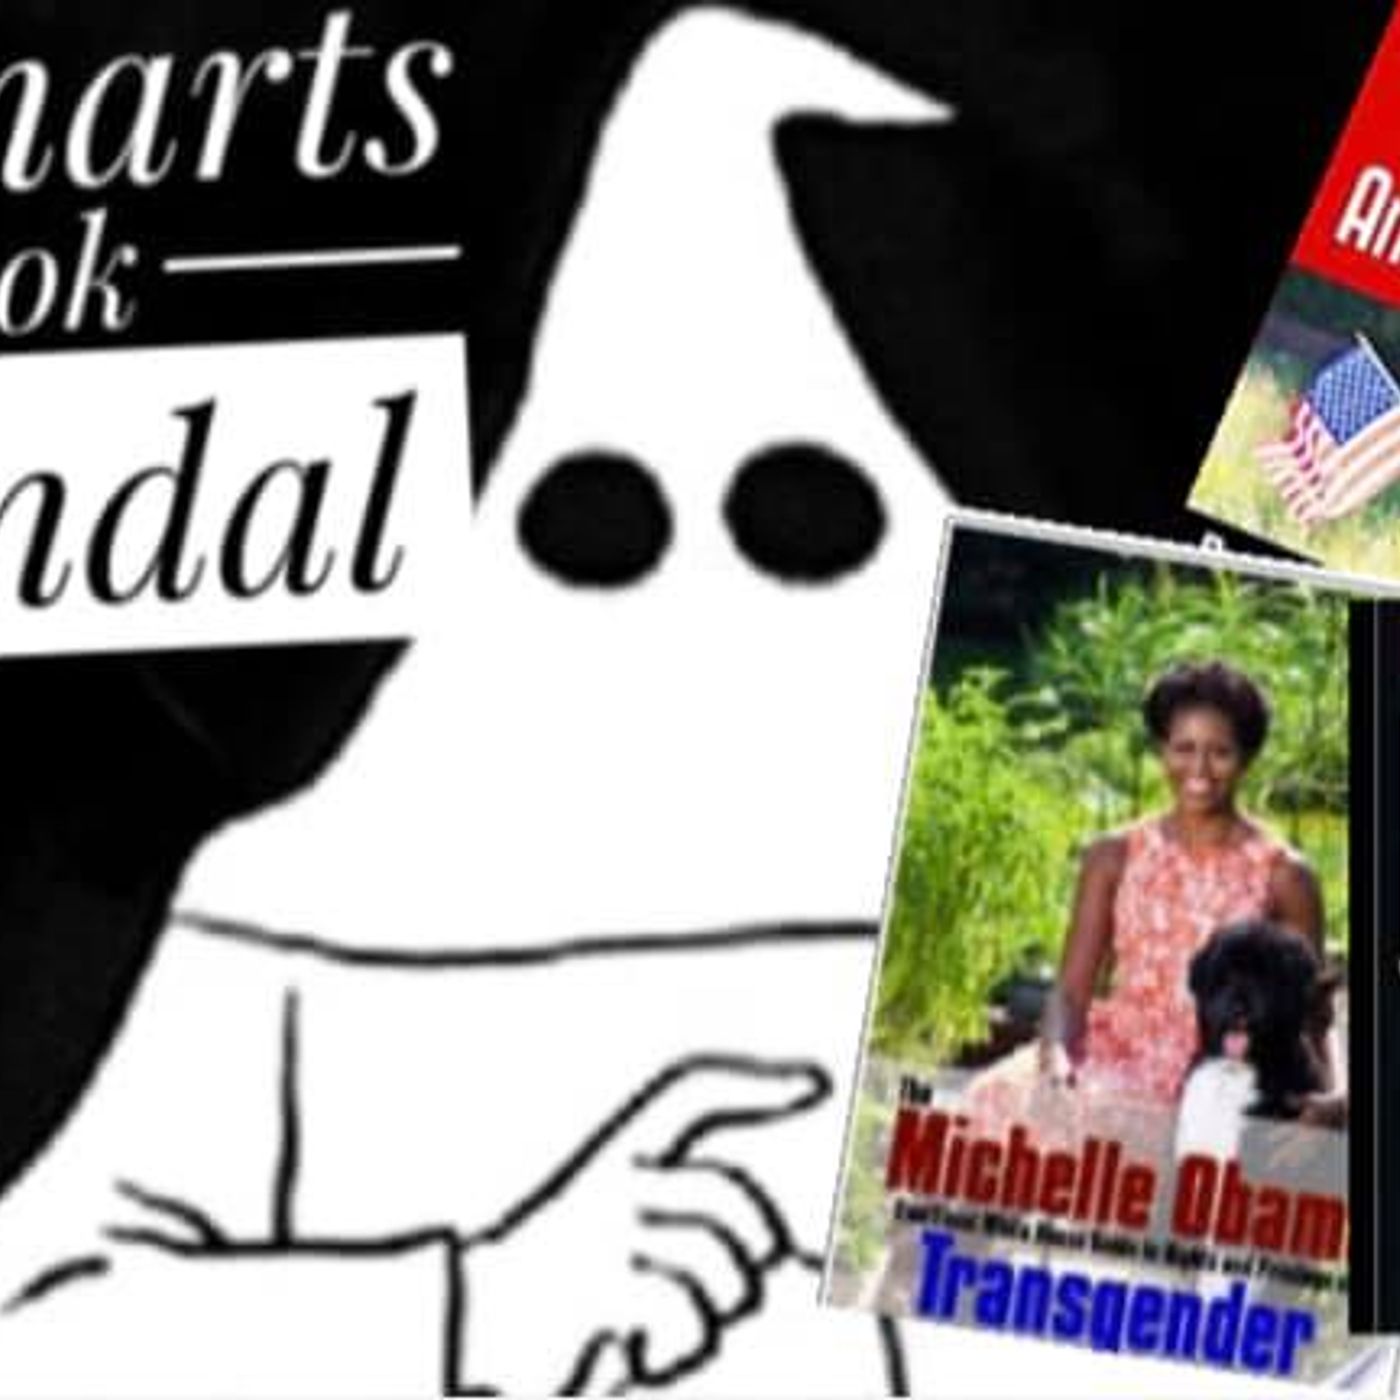 [BREAKING] Walmart sells White Nationalists Books